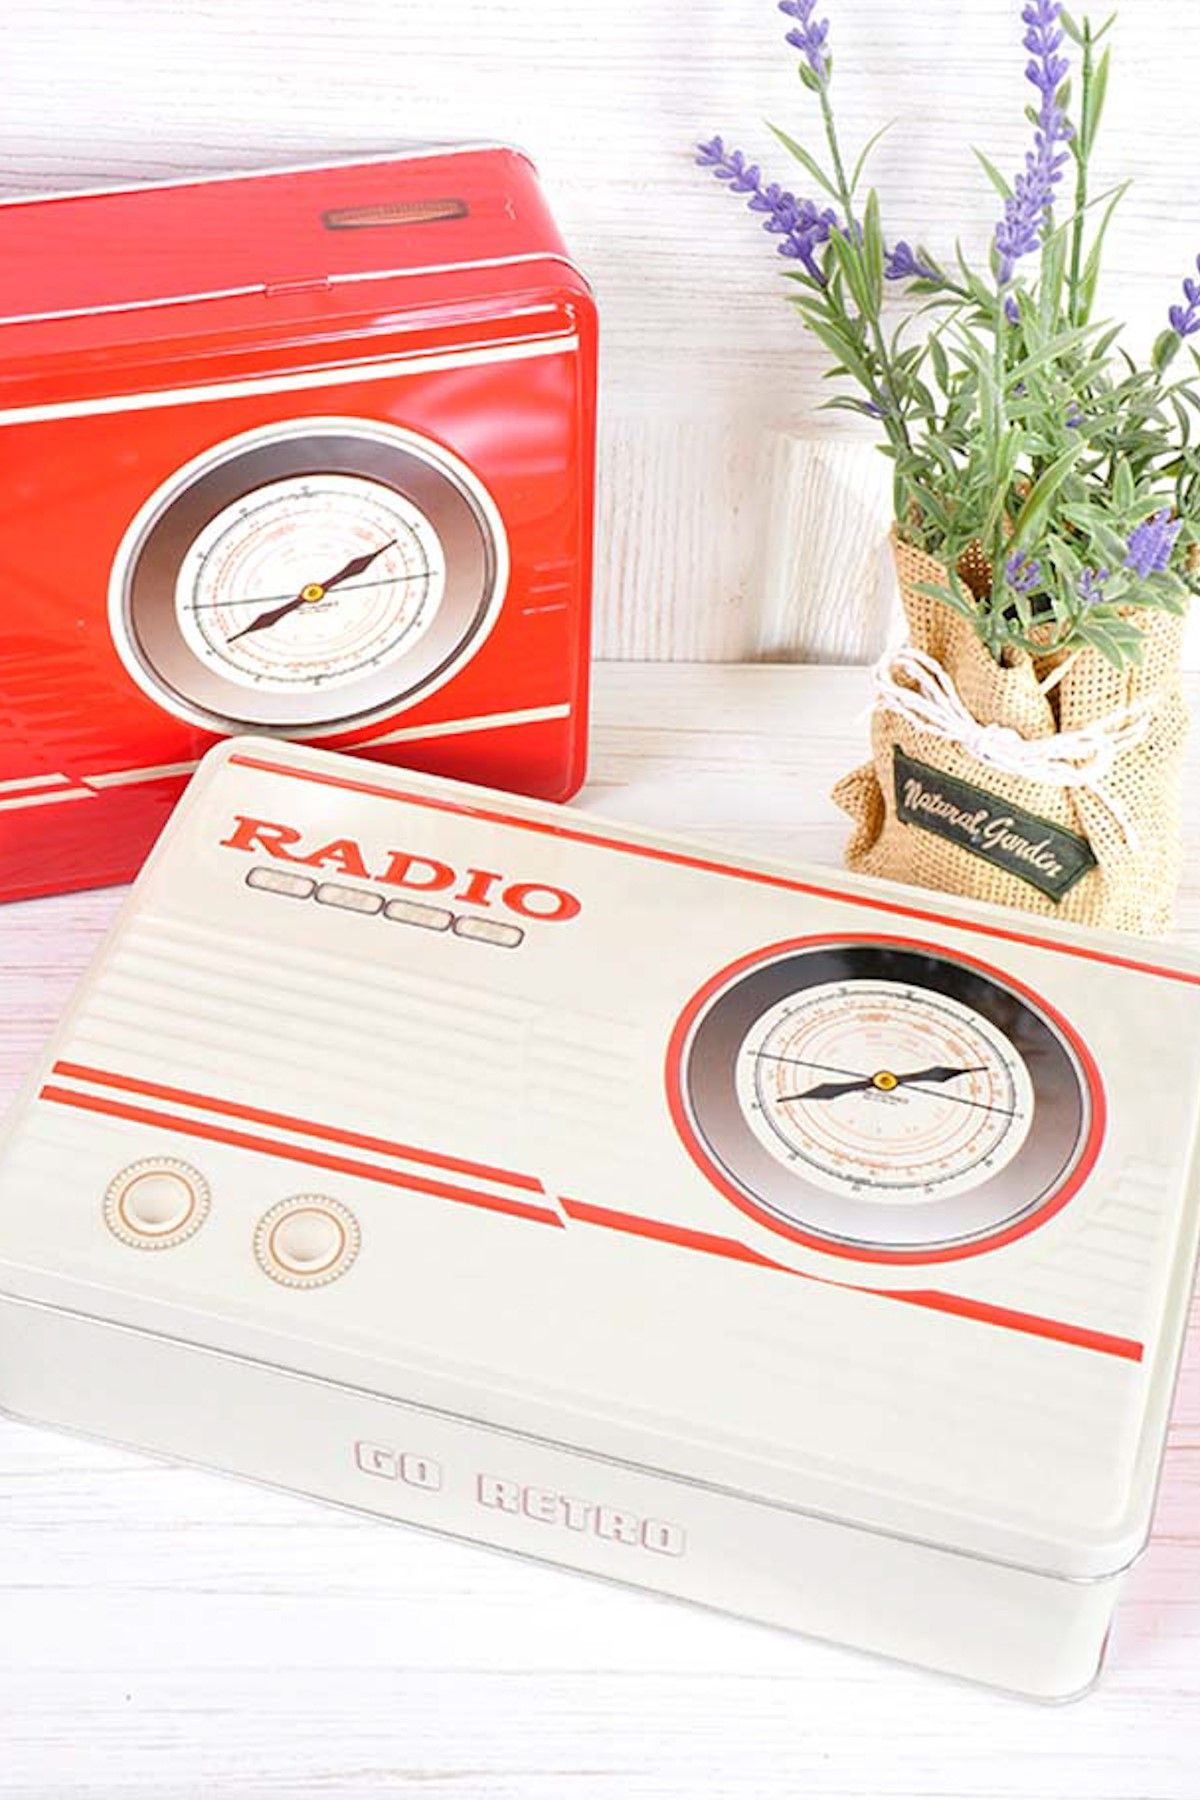 The Mia Kutu Radyo Krem BOX003